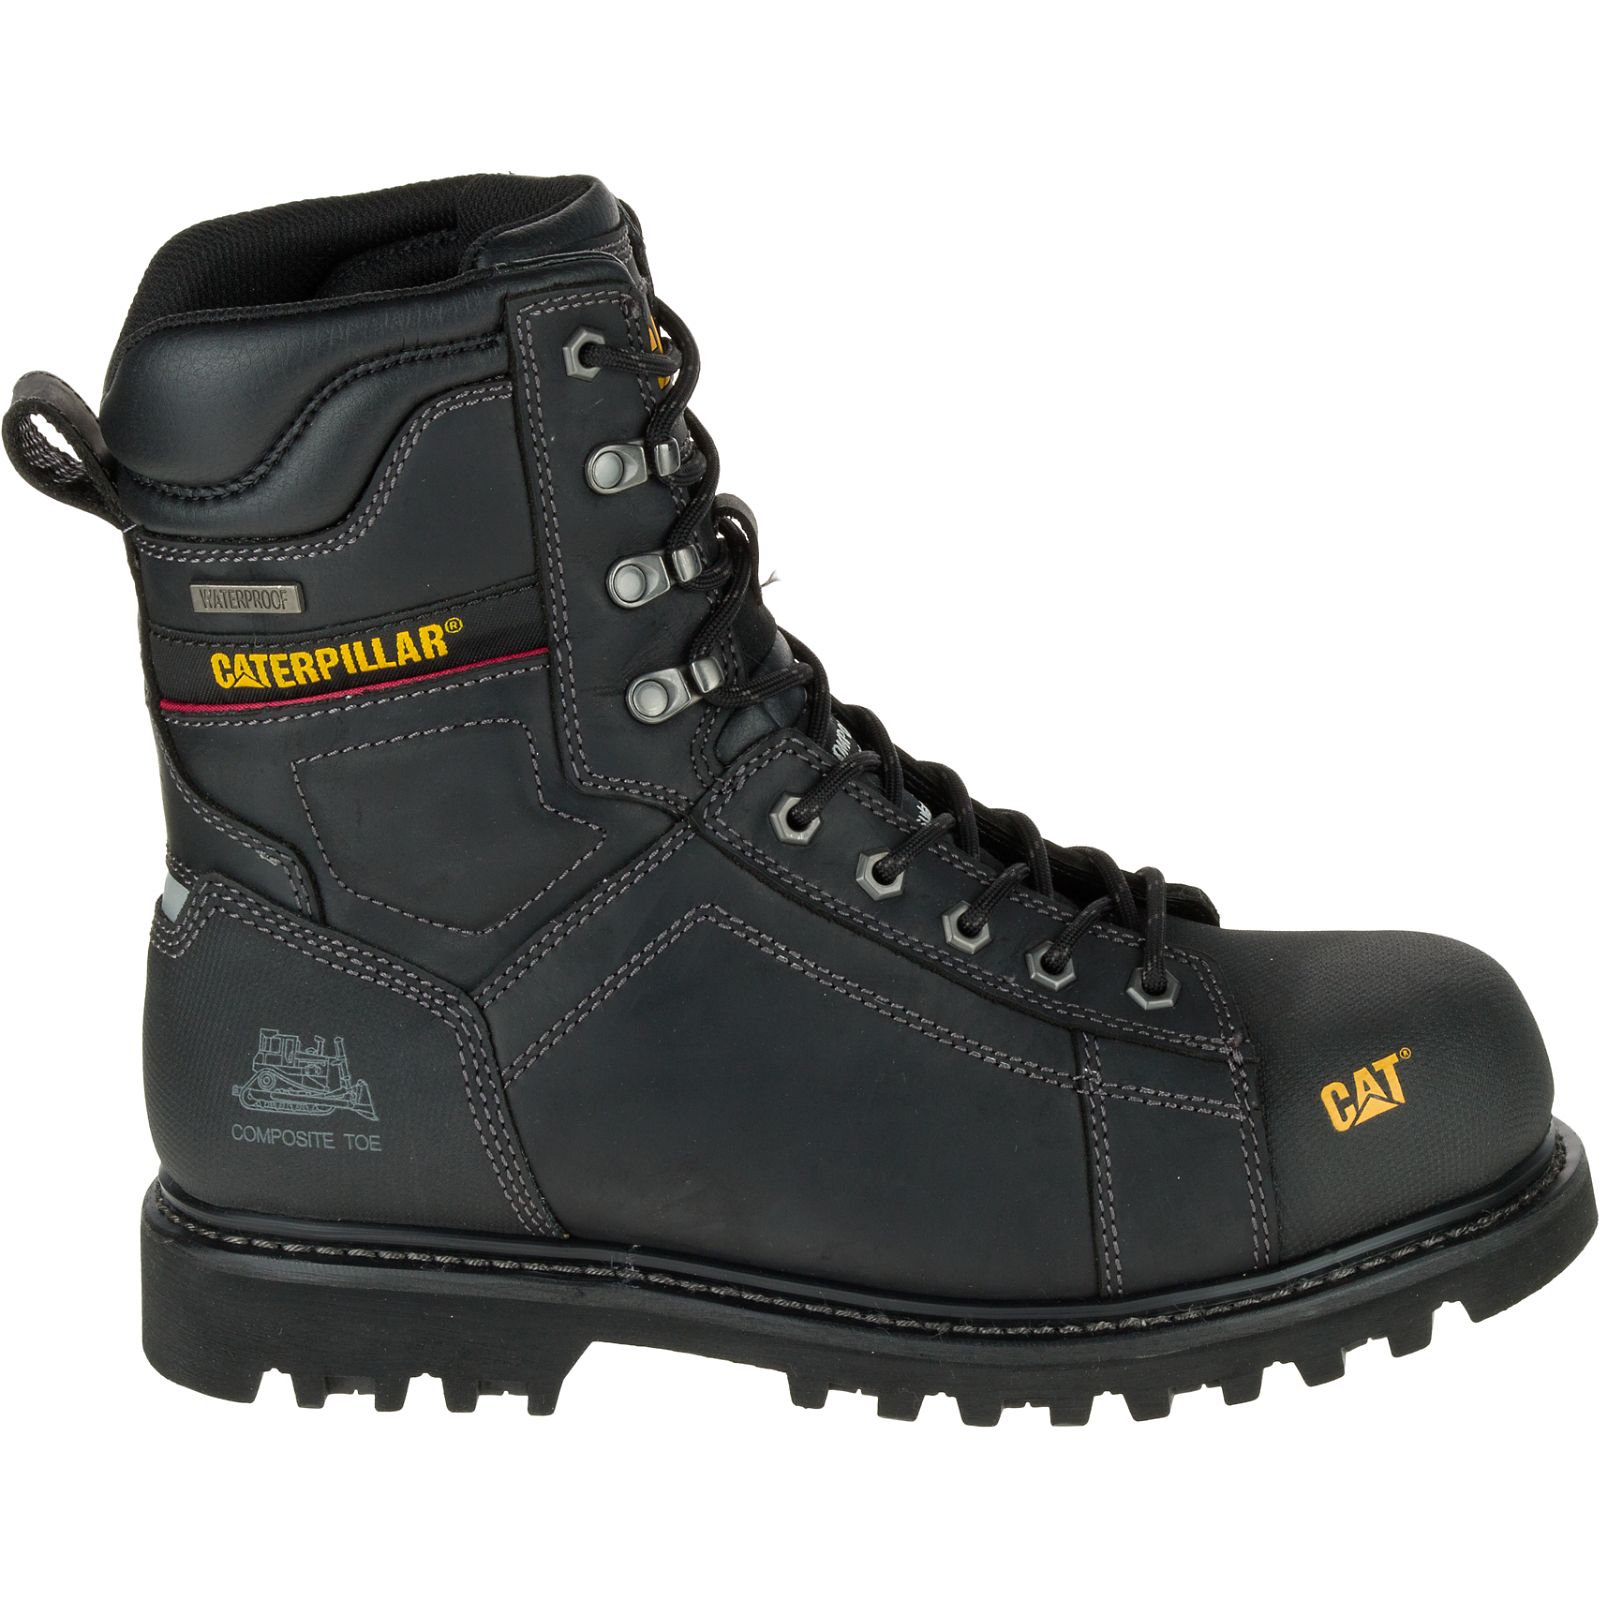 Caterpillar Boots Lahore - Caterpillar Control 8" Waterproof Composite Toe Csa Mens Work Boots Black (045362-HLD)